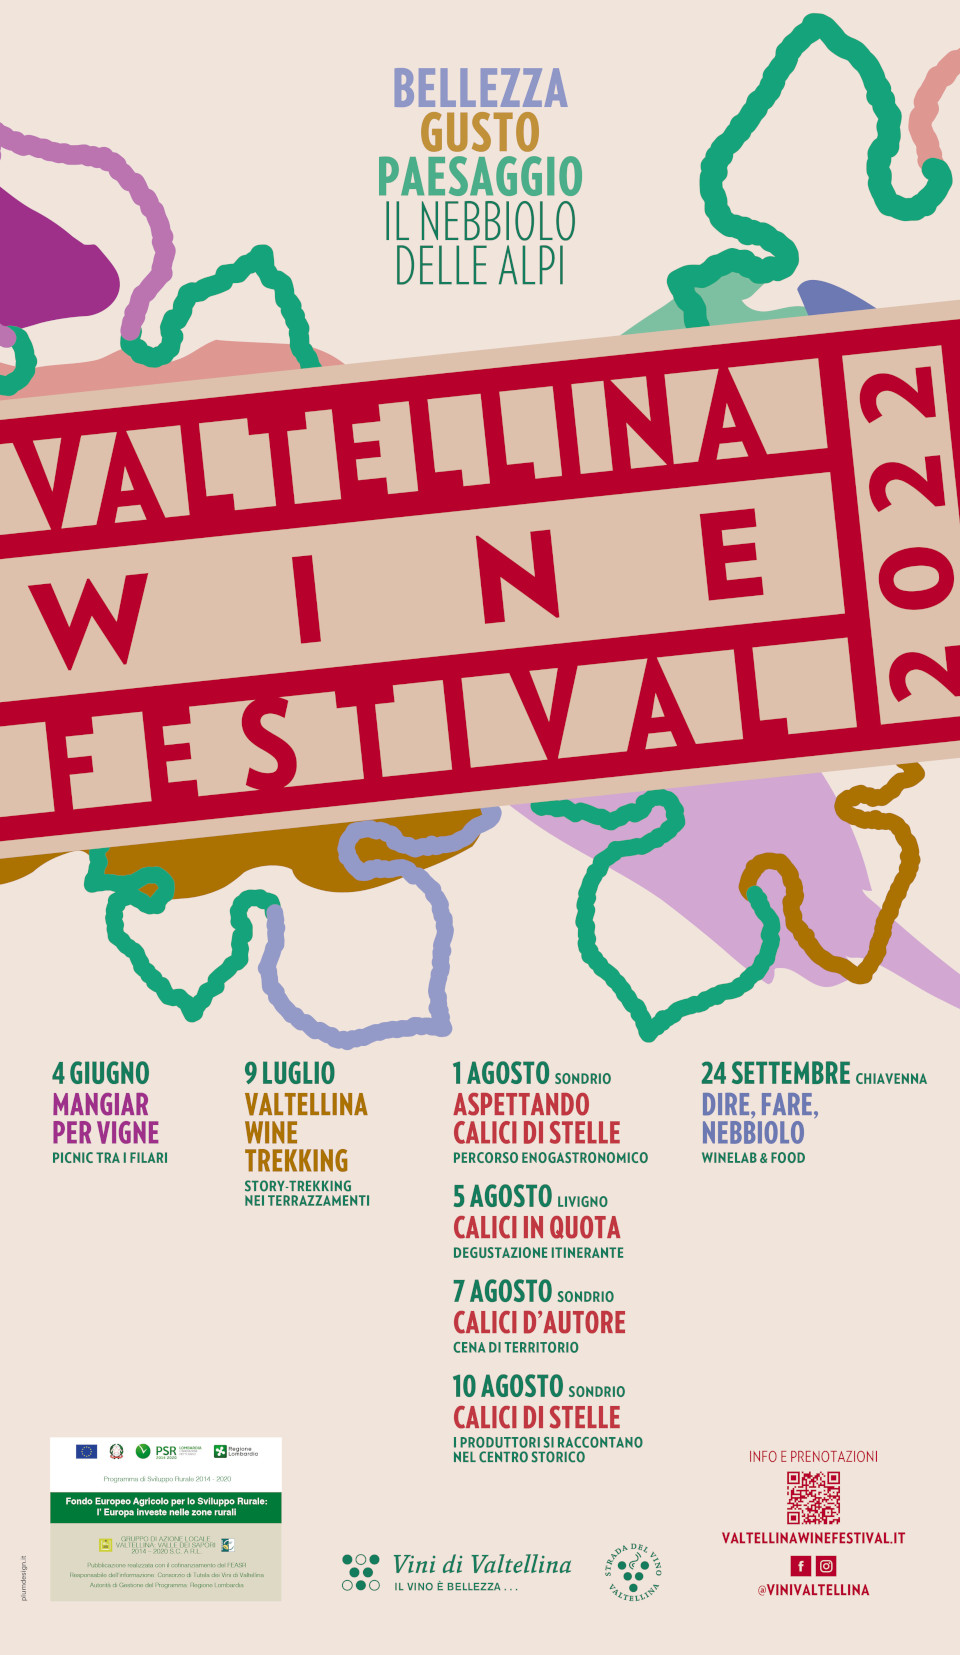 Valtellina wine festival